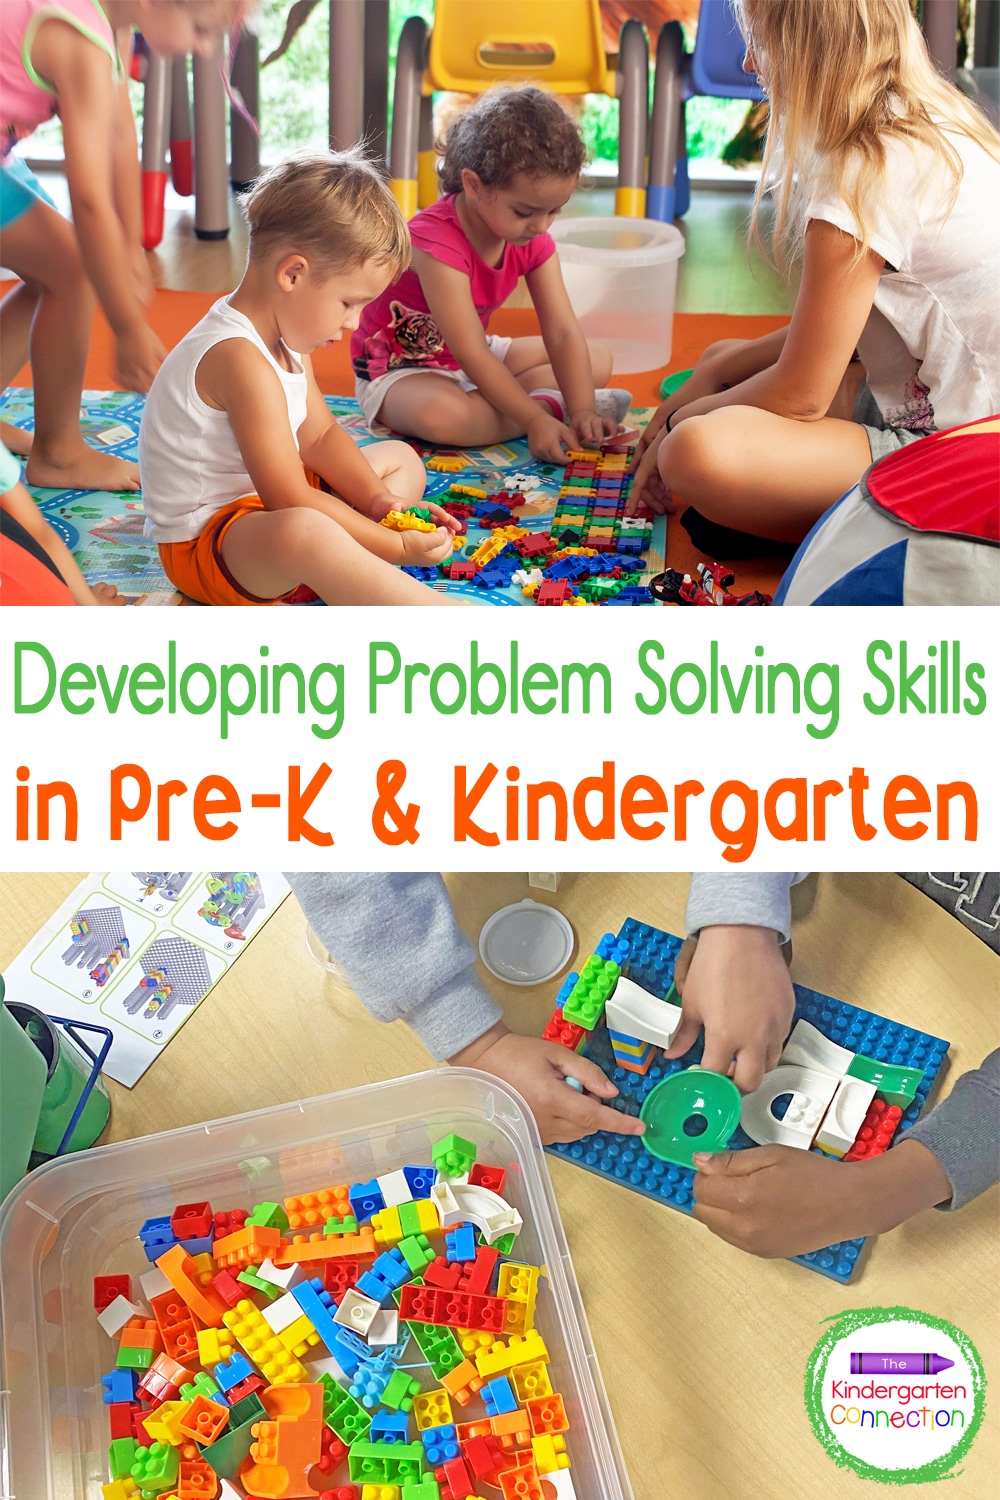 The Importance of Developing Pre-K & Kindergarten Problem Solving Skills